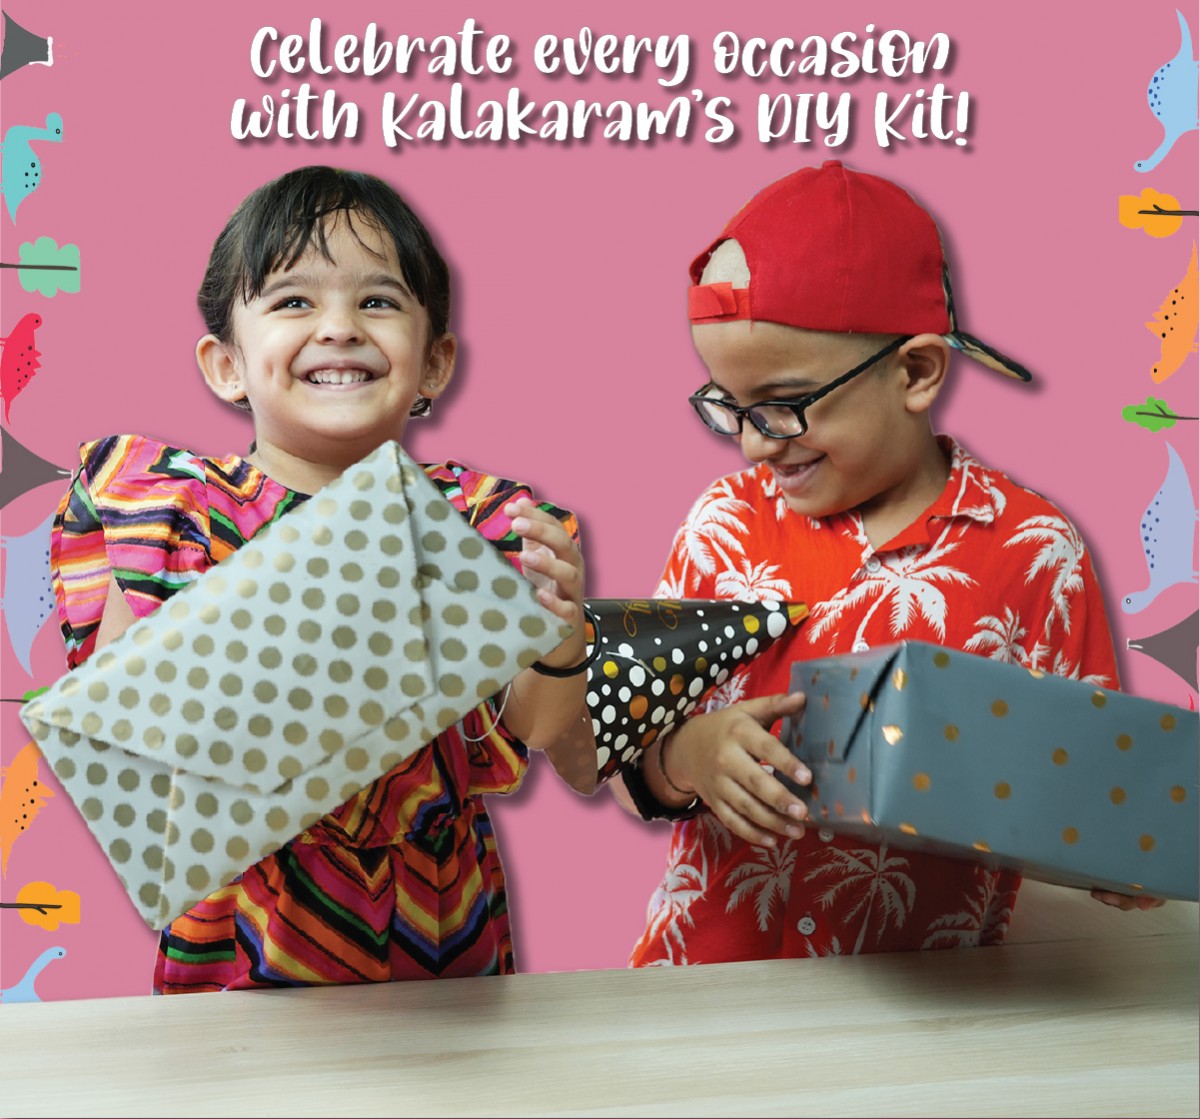 Kalakaram Paint Your Own Dinosaur Coaster DIY Kit for Kids, Fun & Educational Paint Activity for Kids, Hobby and Craft Kit, 5Y+, Multicolour